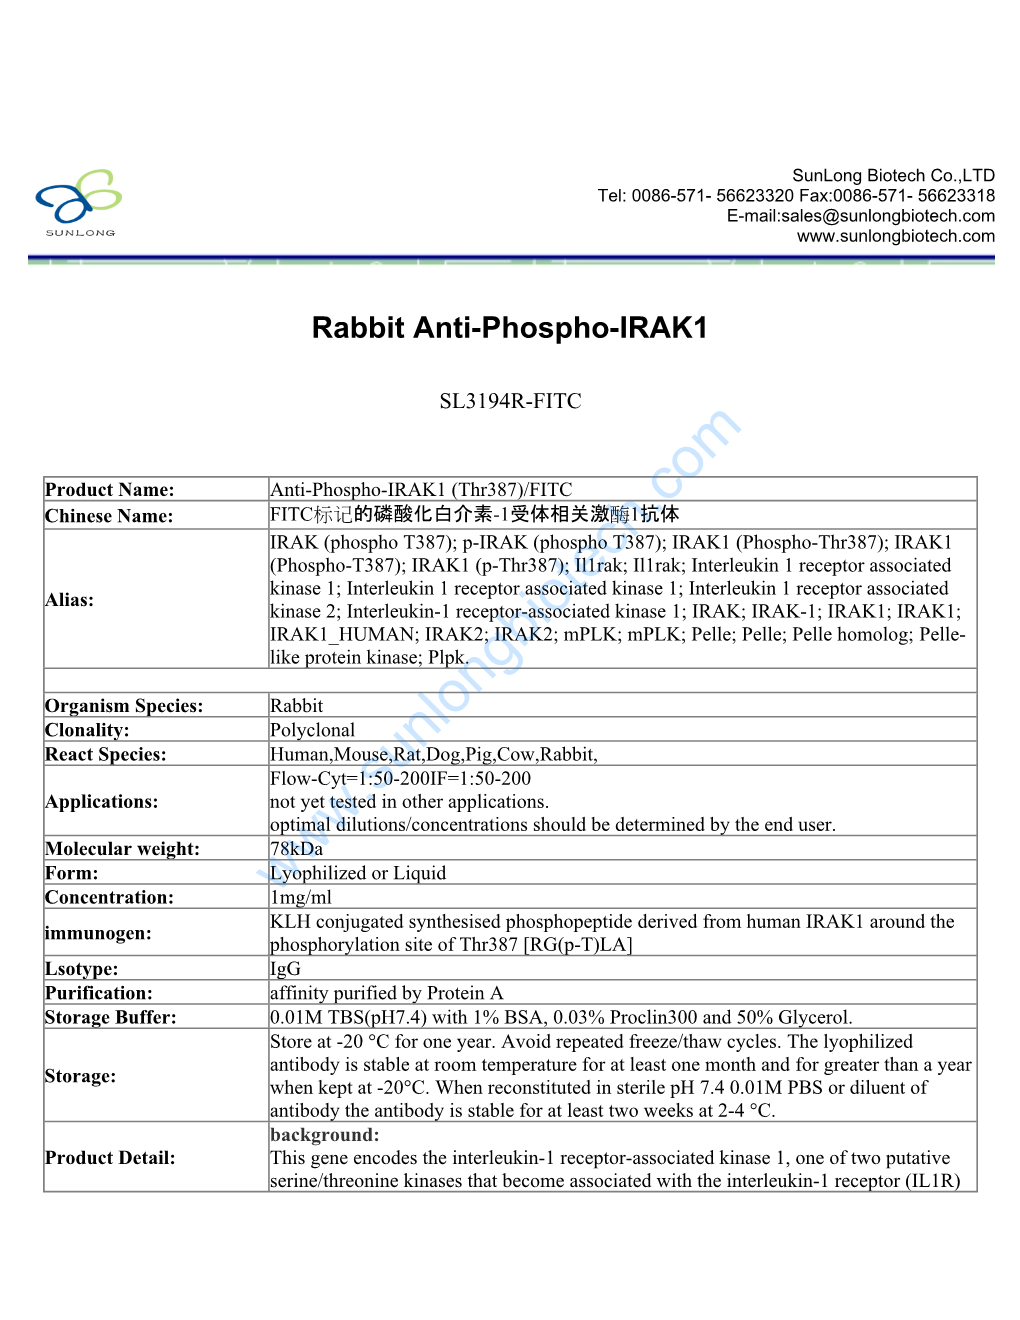 Rabbit Anti-Phospho-IRAK1-SL3194R-FITC